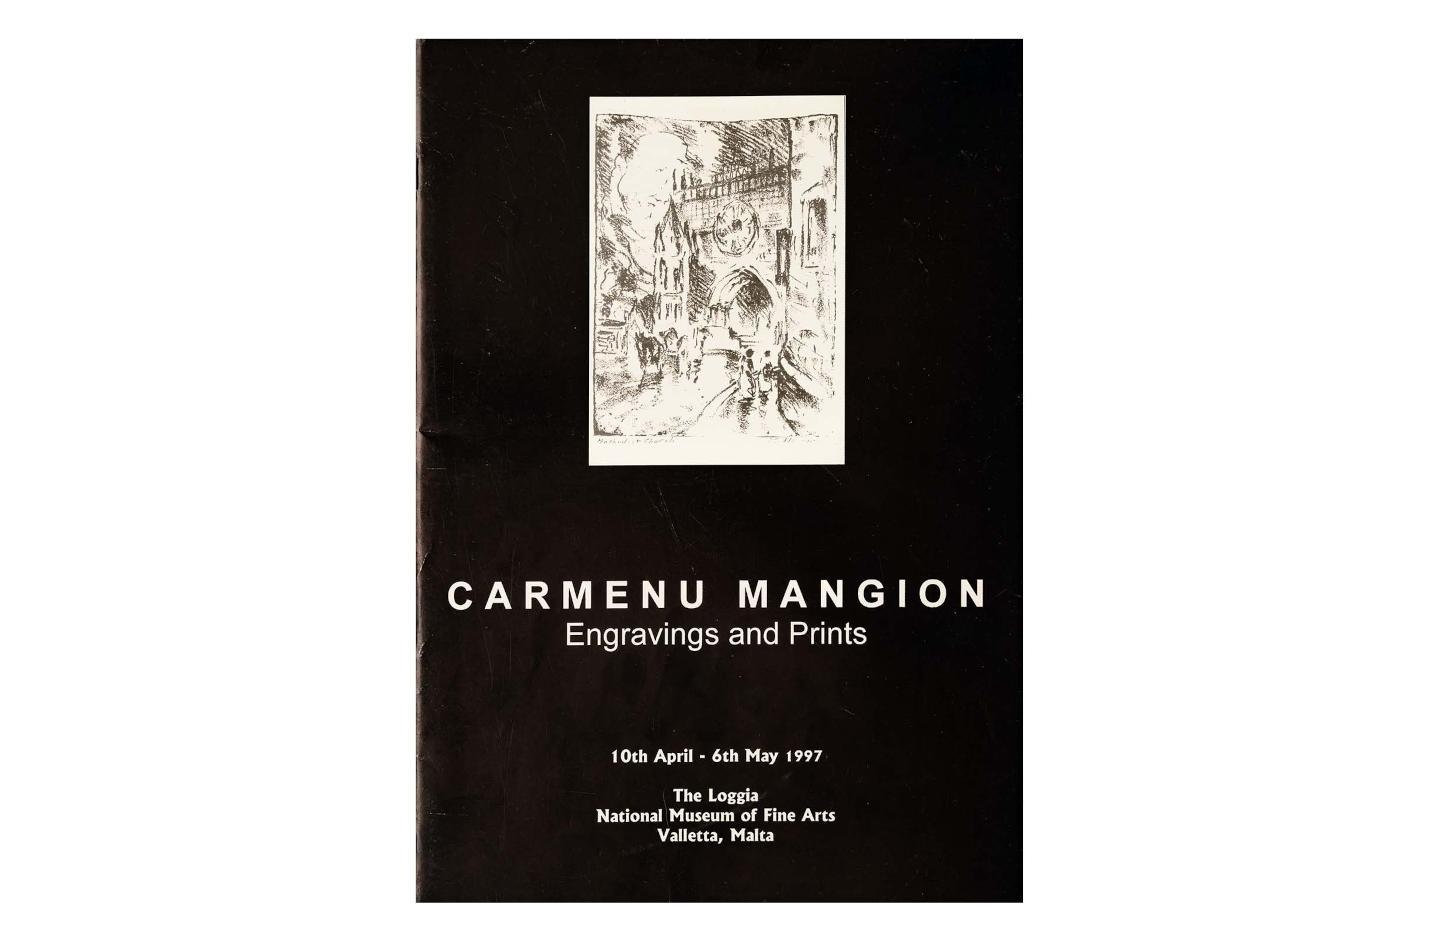 Carmenu Mangion: Engravings and Prints